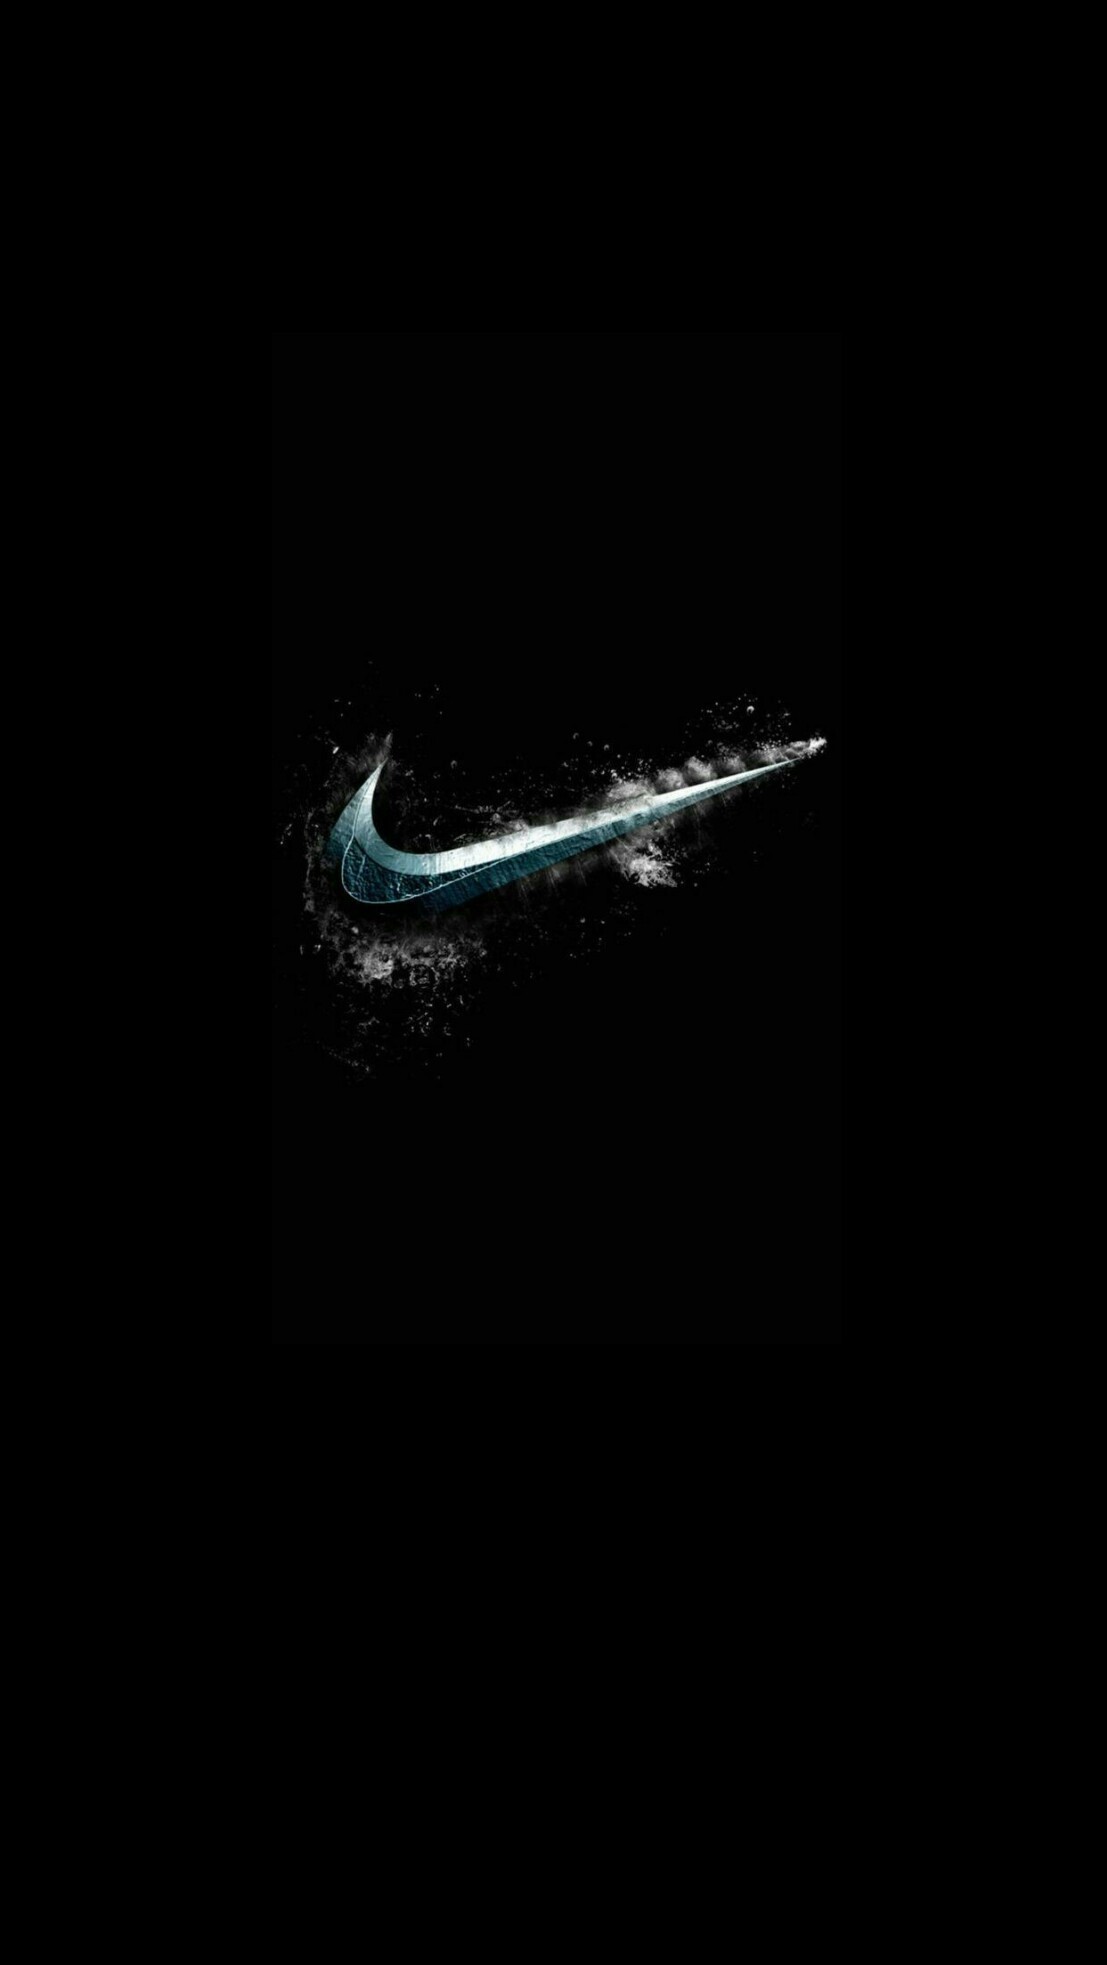 Обои на айфон найк. Обои Nike. Найк на черном фоне. Nike логотип на черном фоне. Nike на темном фоне.